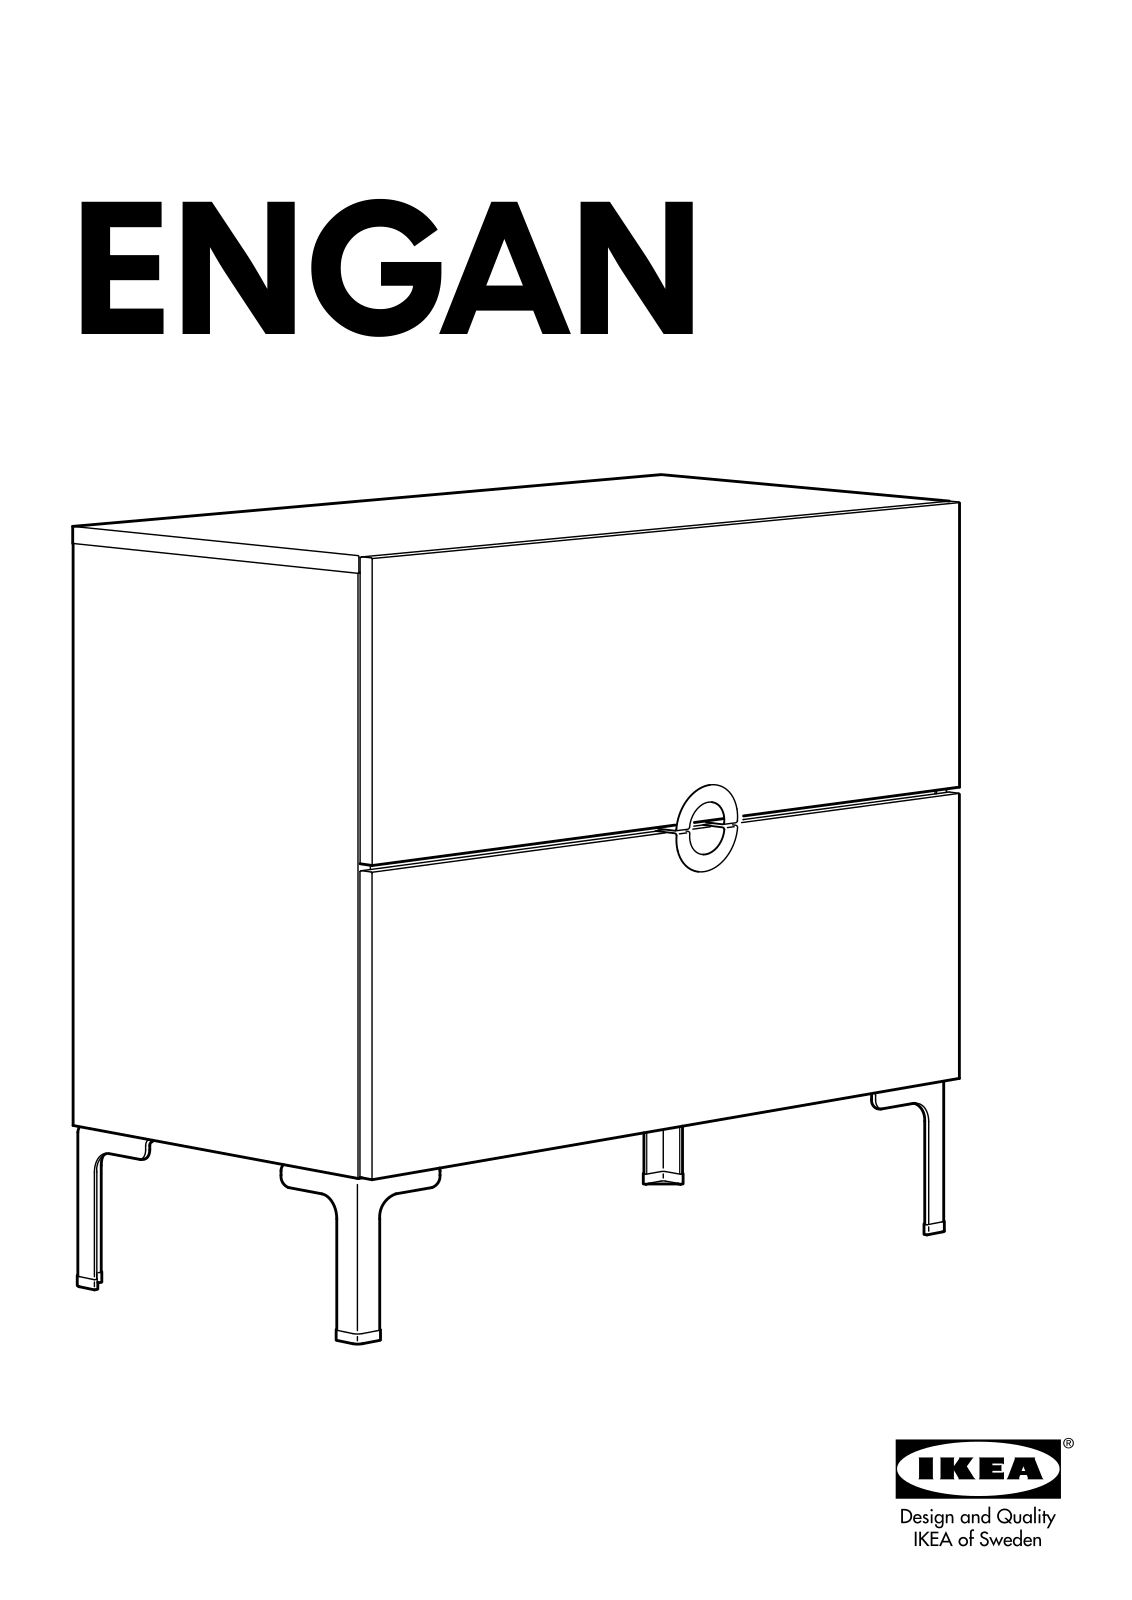 IKEA ENGAN User Manual